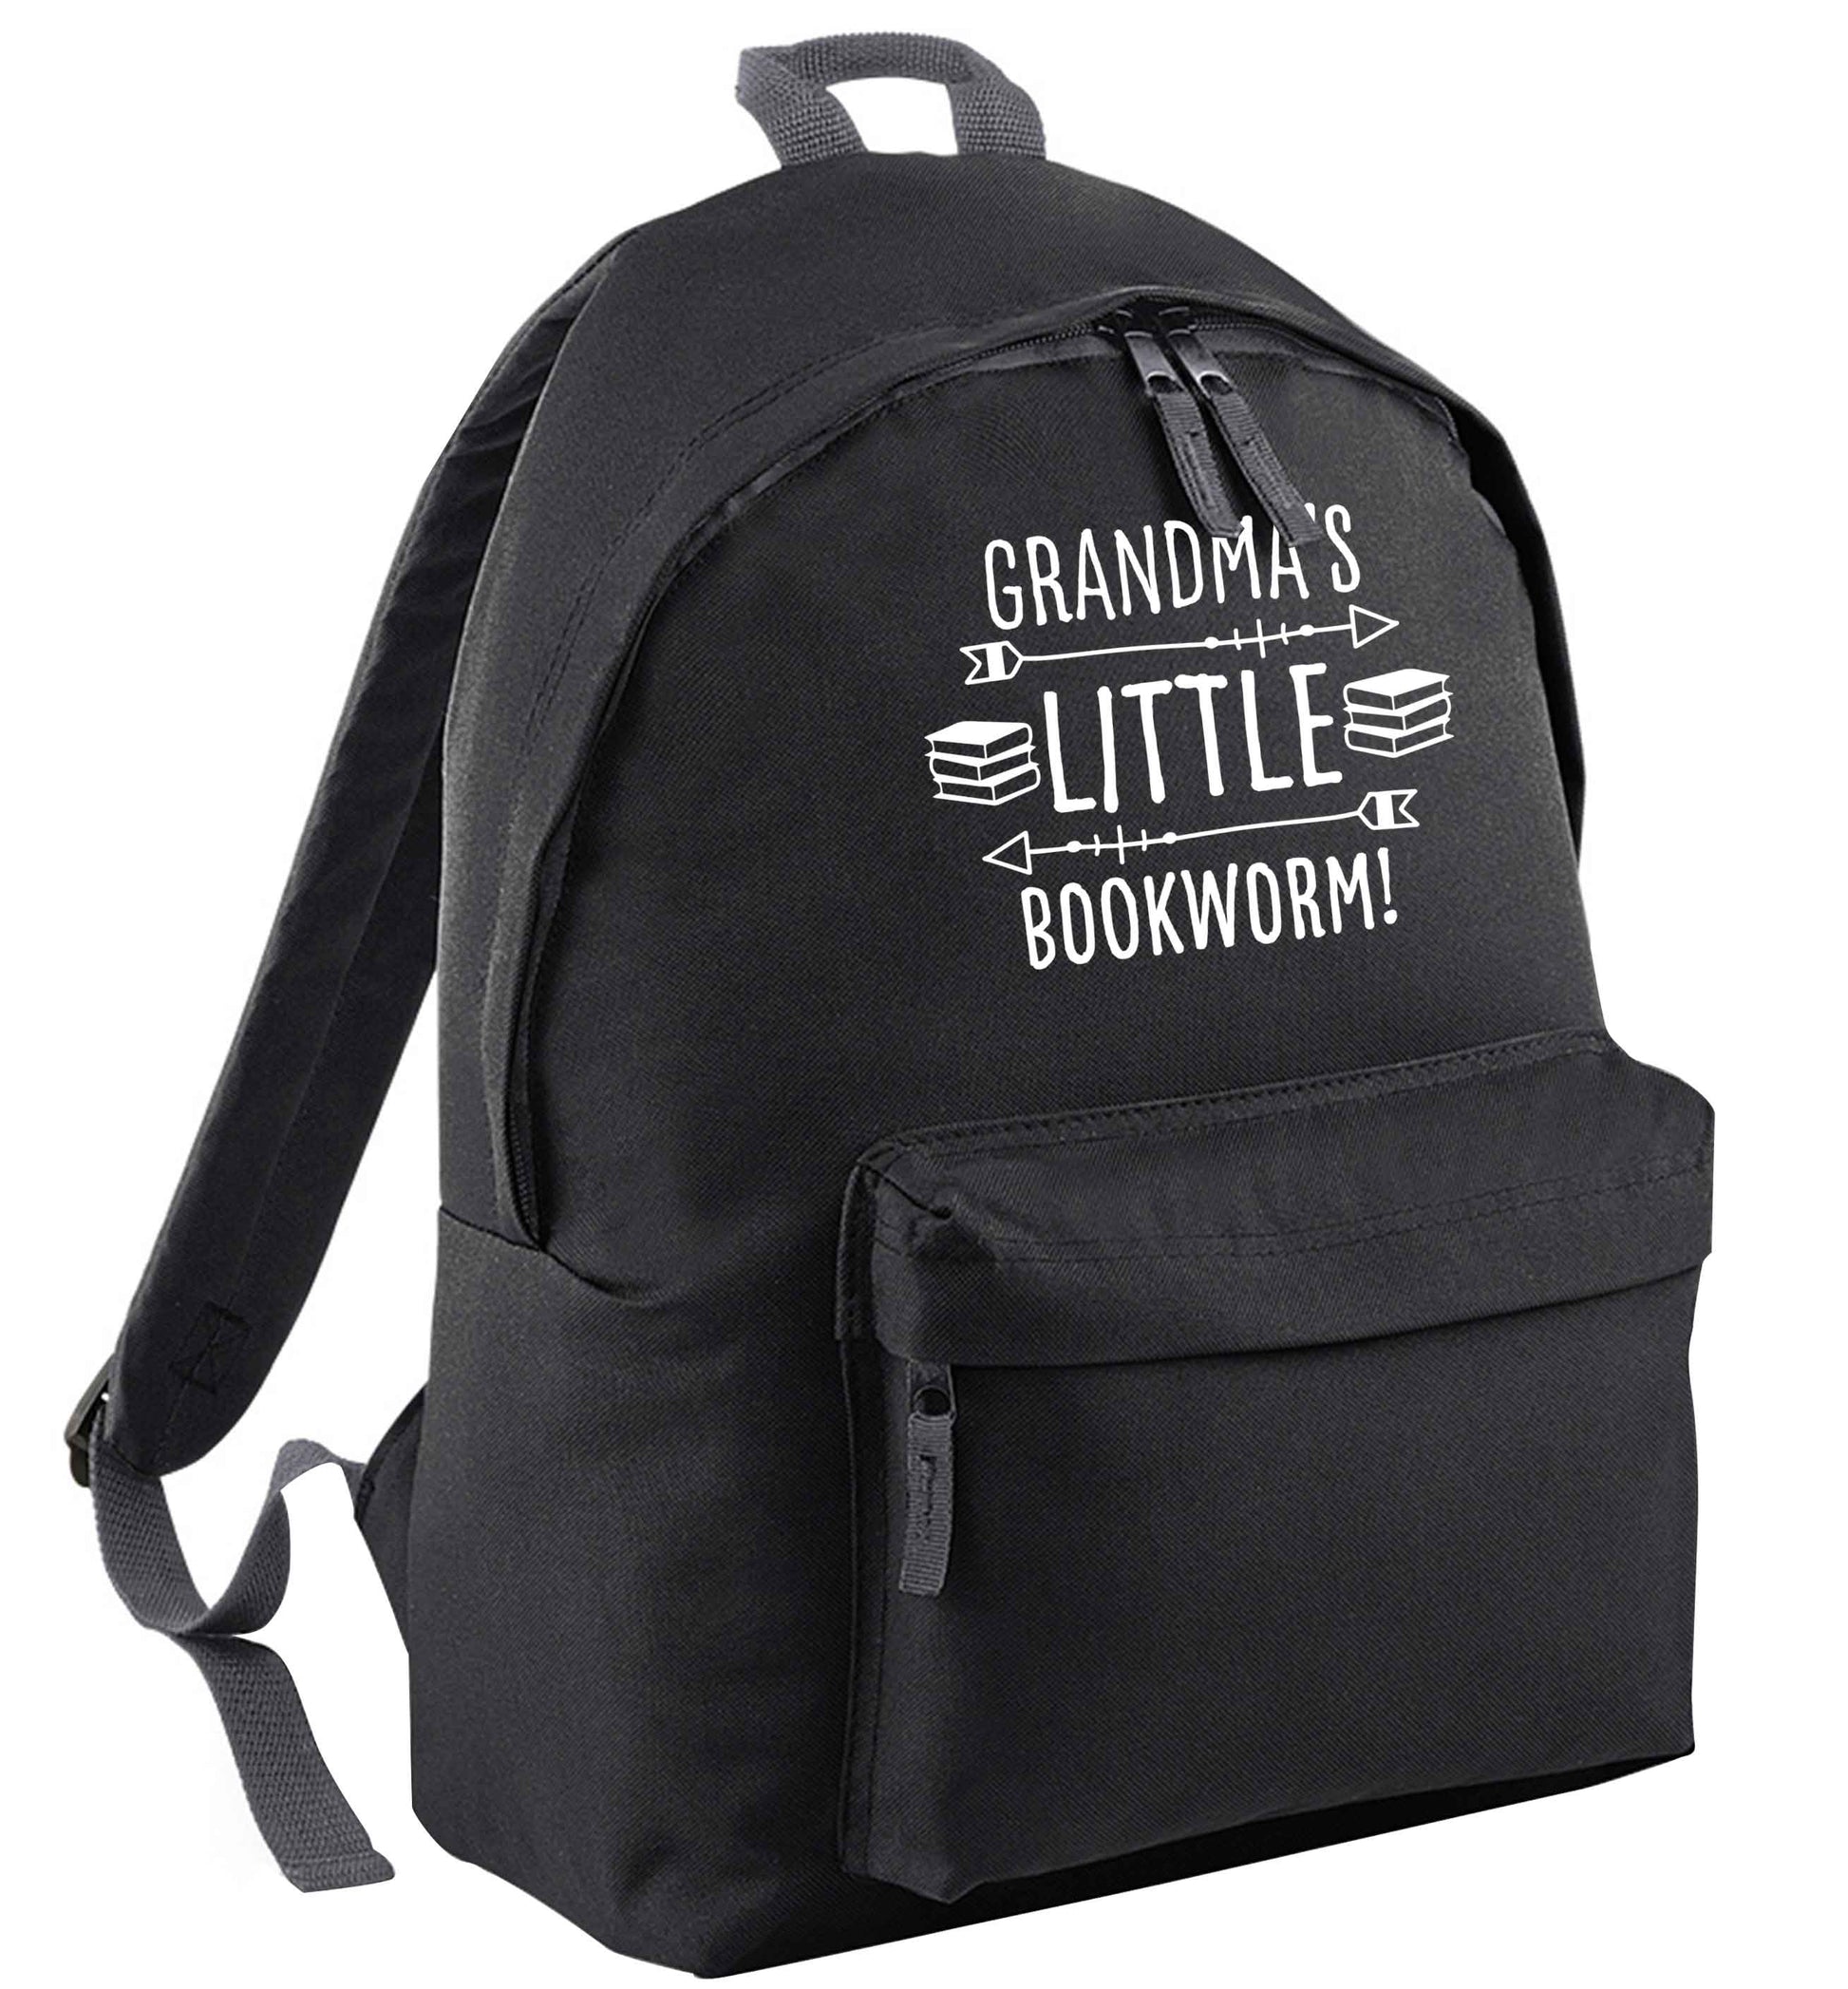 Grandma's little bookworm | Children's backpack